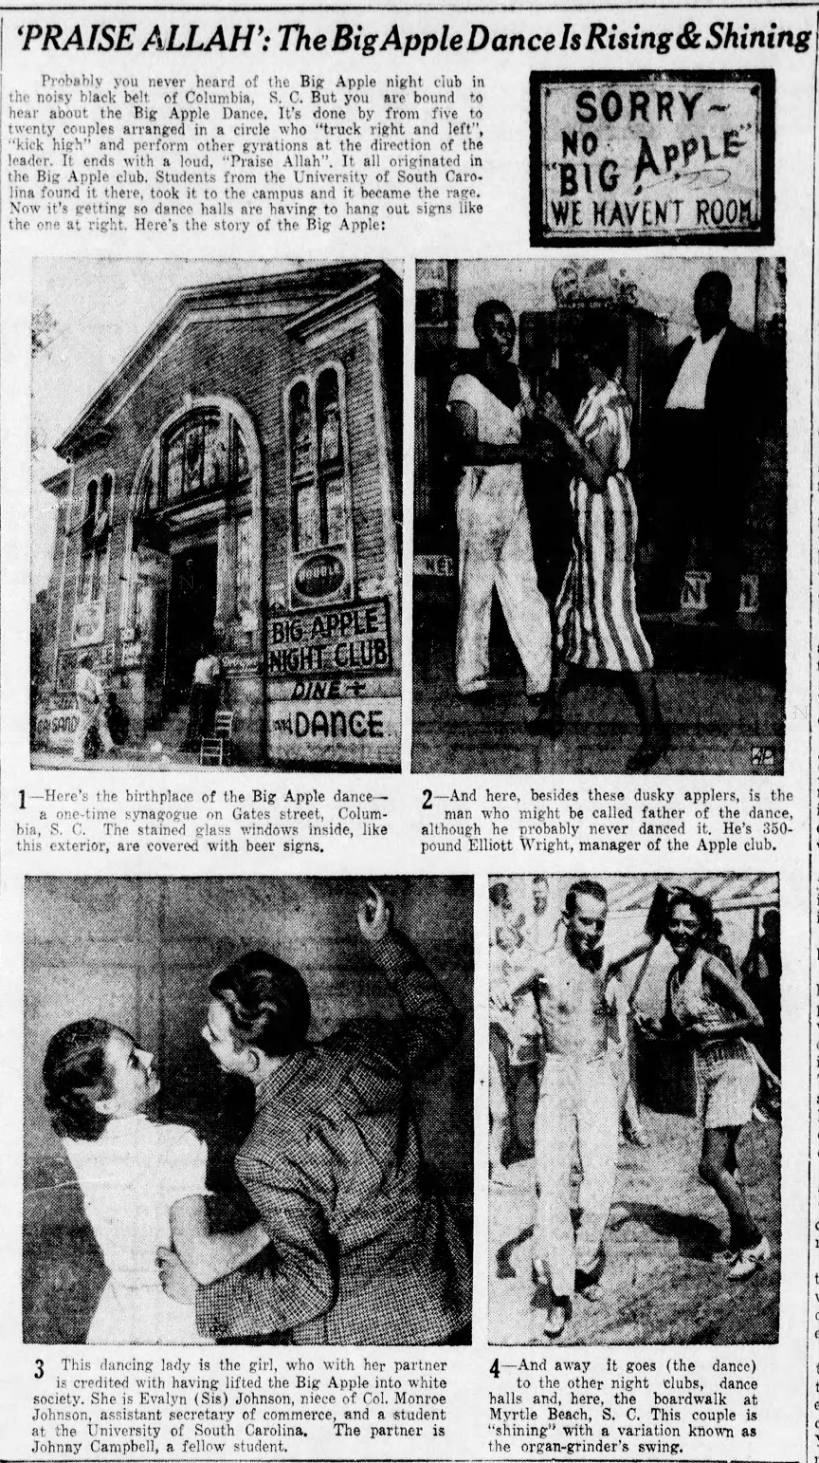 Photos of the 1937 "Big Apple" dance and the Columbia, South Carolina "Big Apple Night Club."